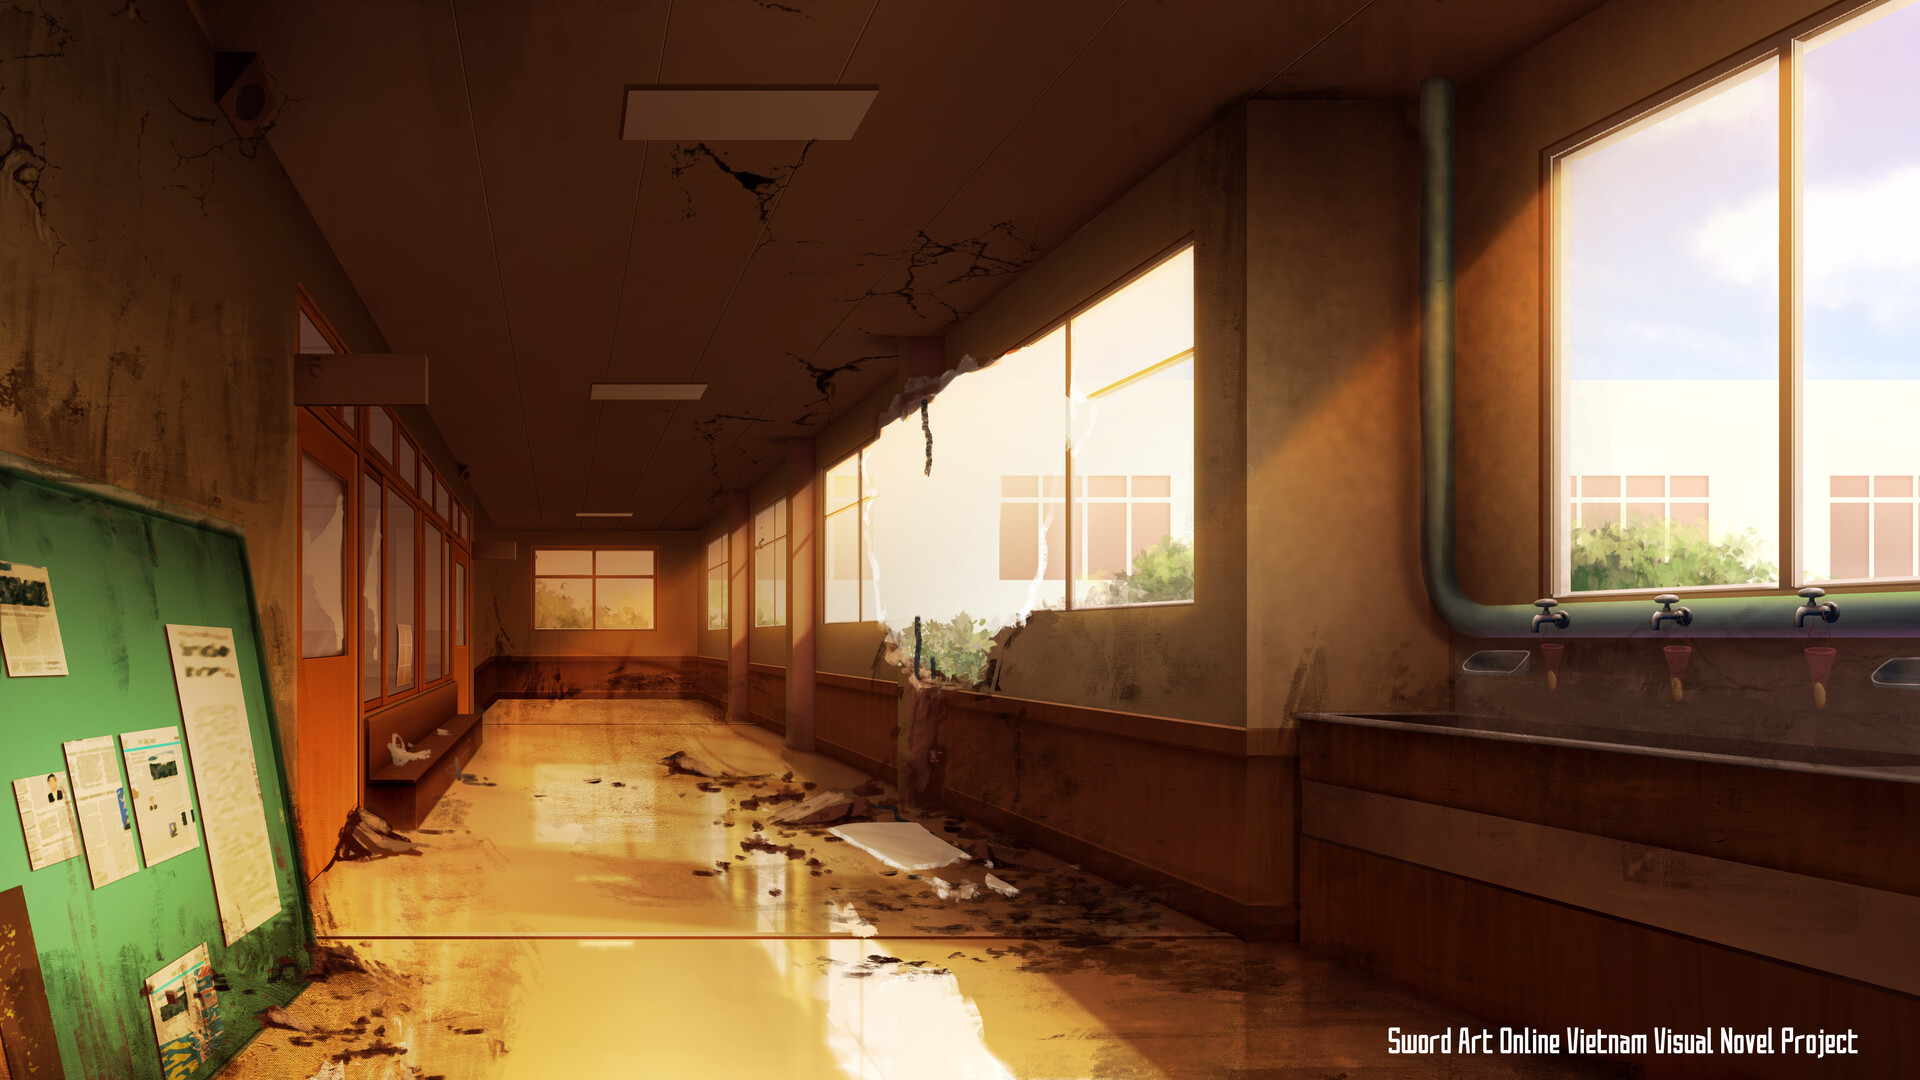 Timelapse Hallway School Background Anime 